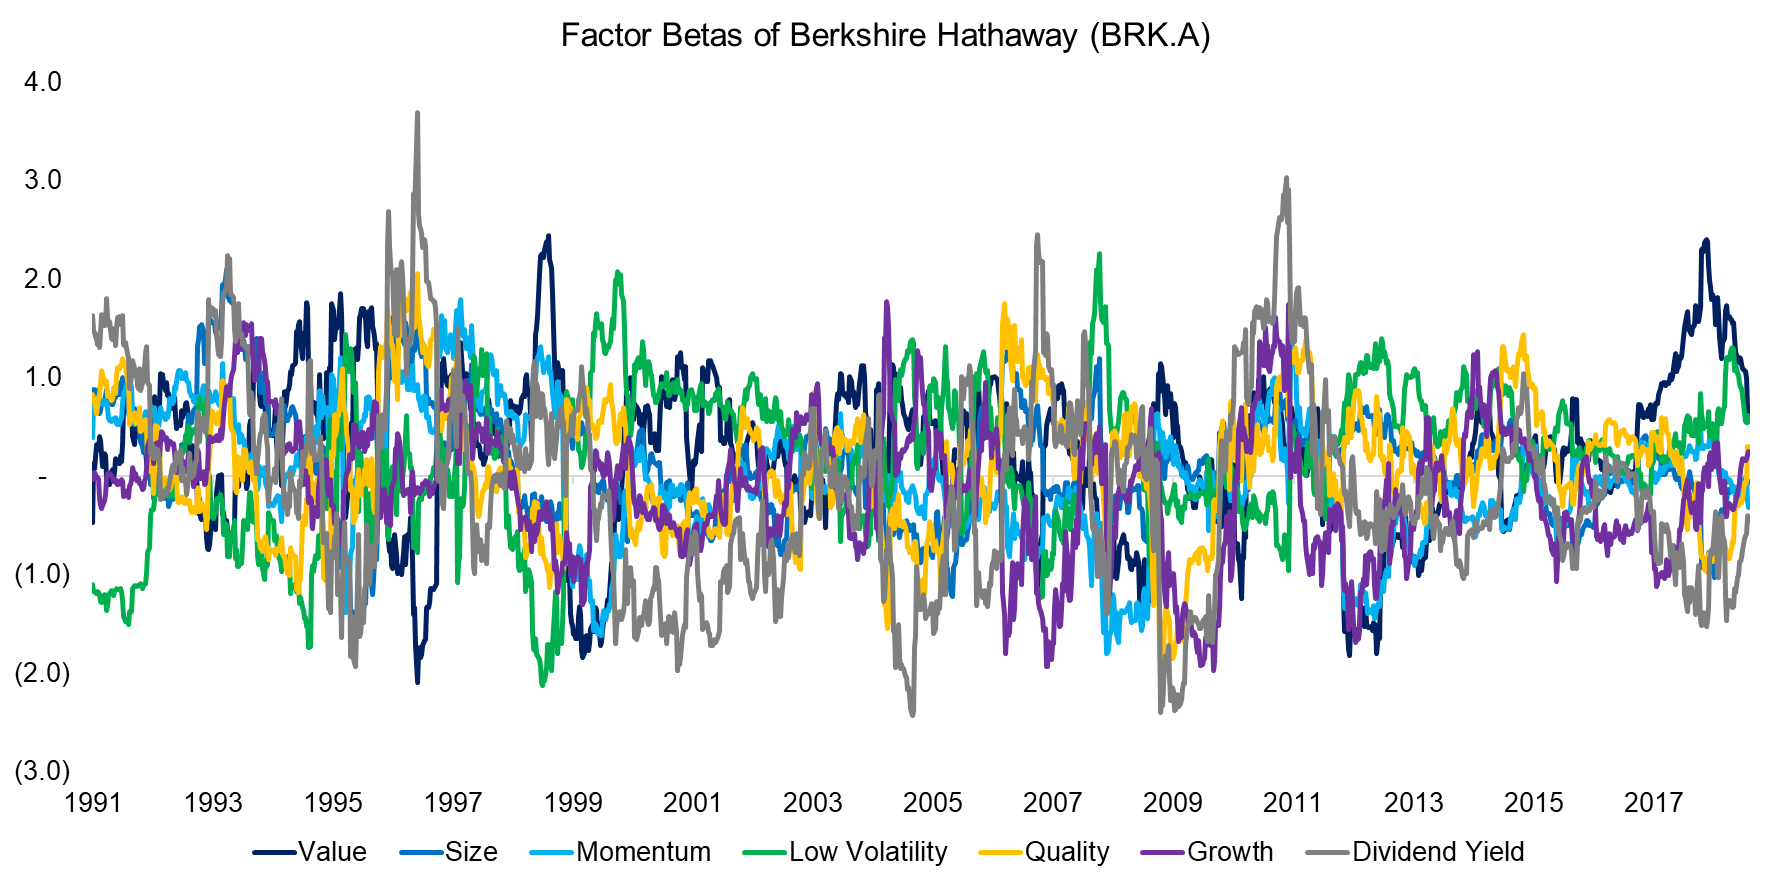 Factor Betas of Berkshire Hathaway (BRK.A)